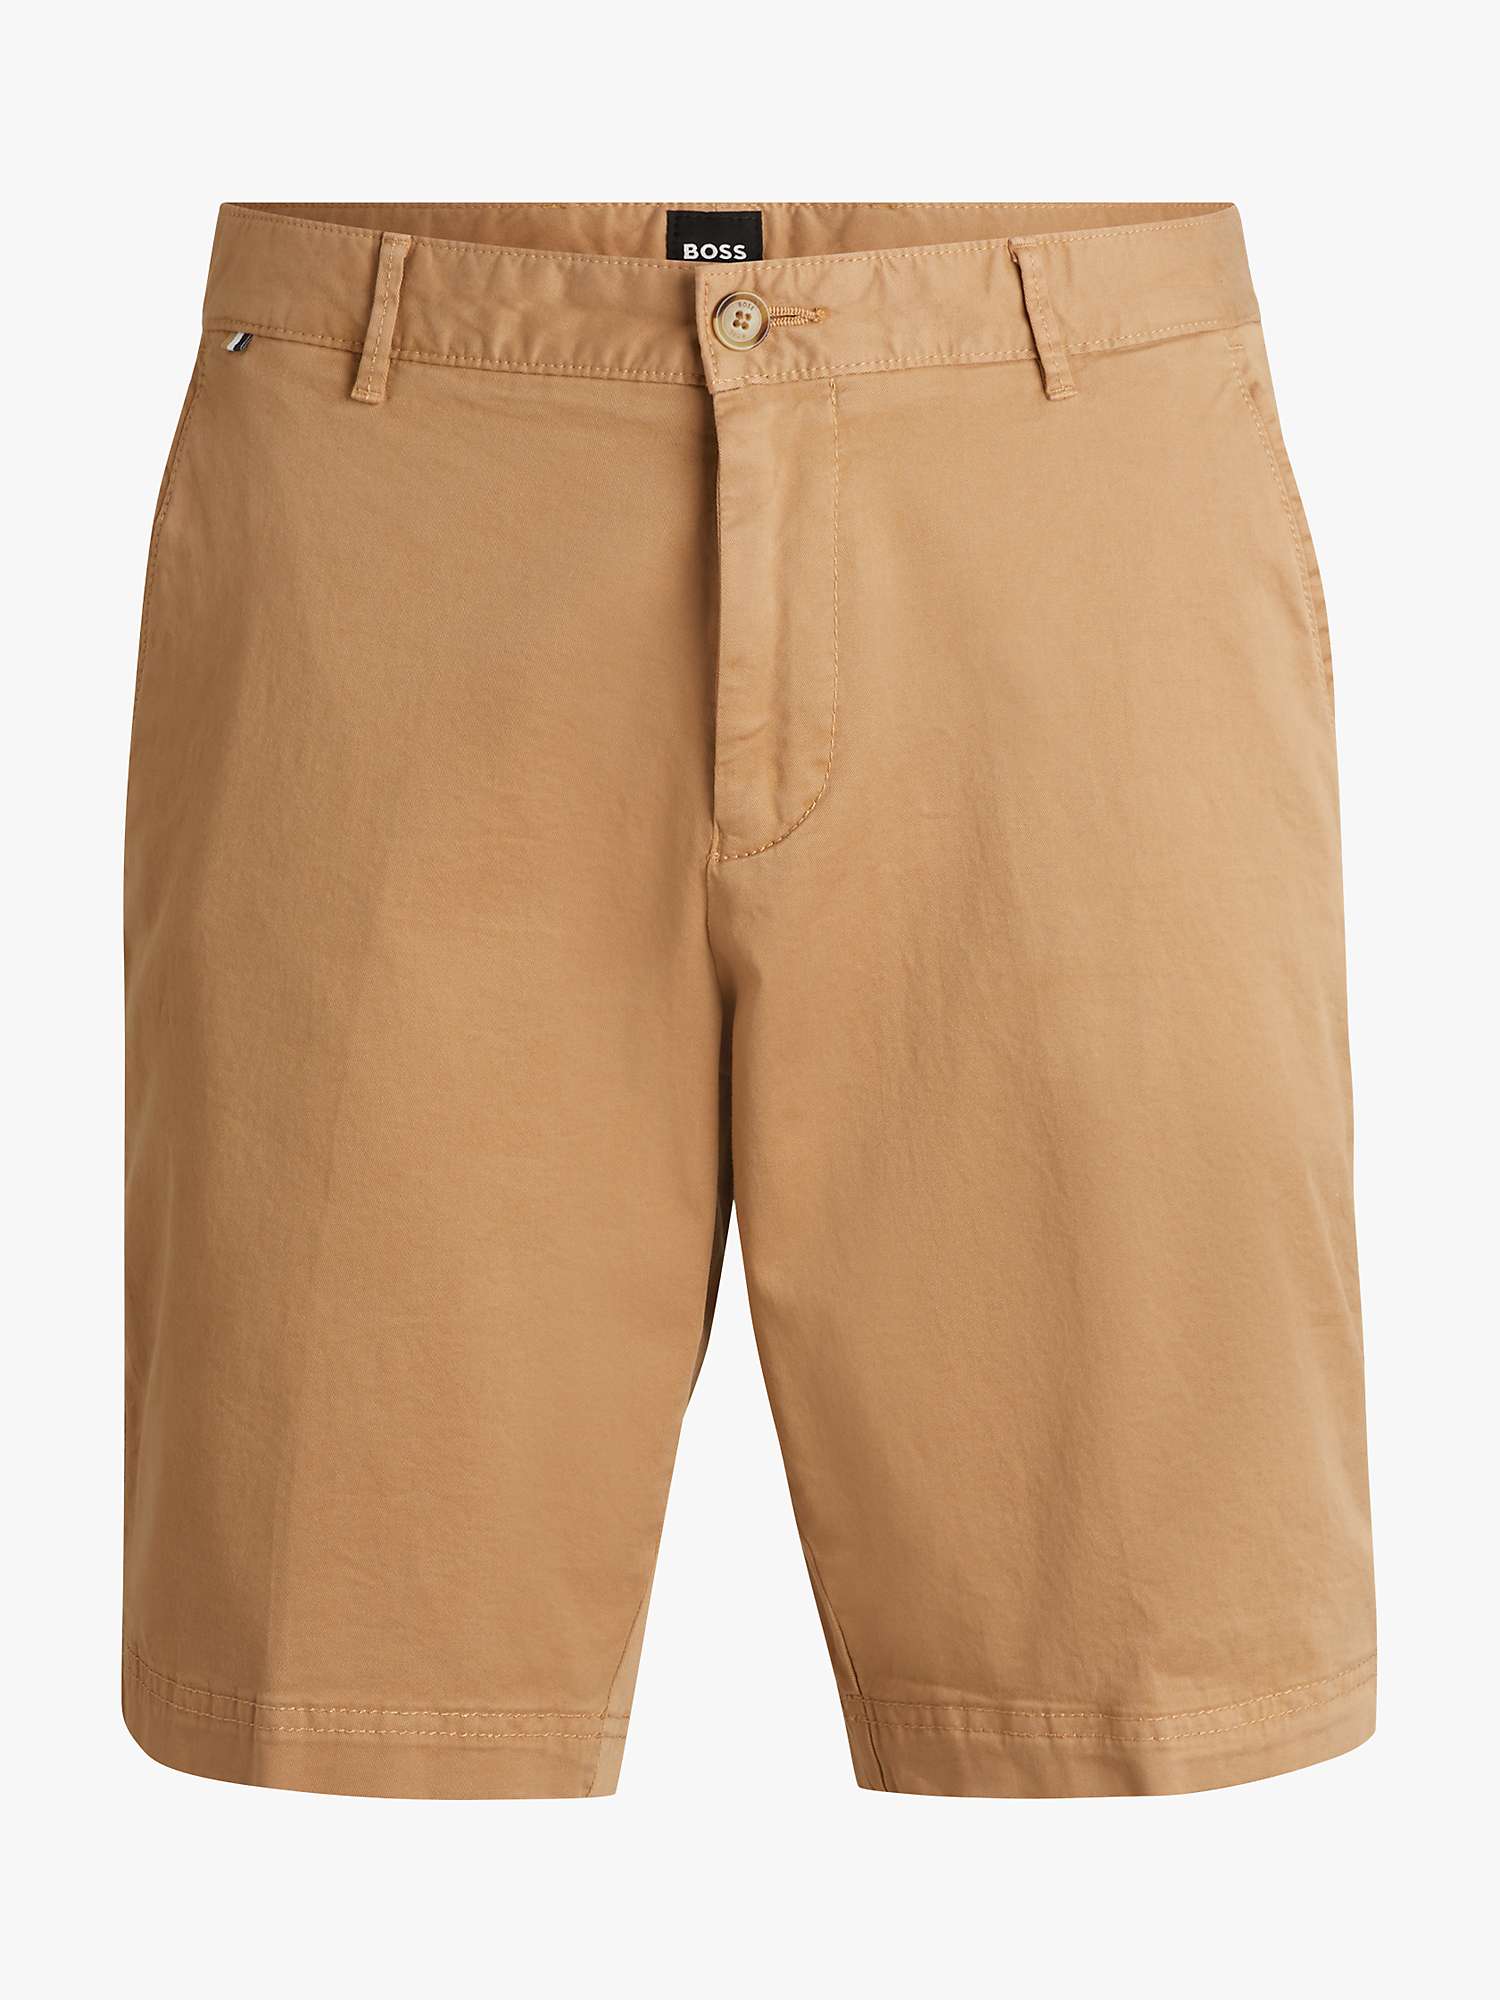 Buy BOSS Slice Slim Fit Chino Shorts Online at johnlewis.com